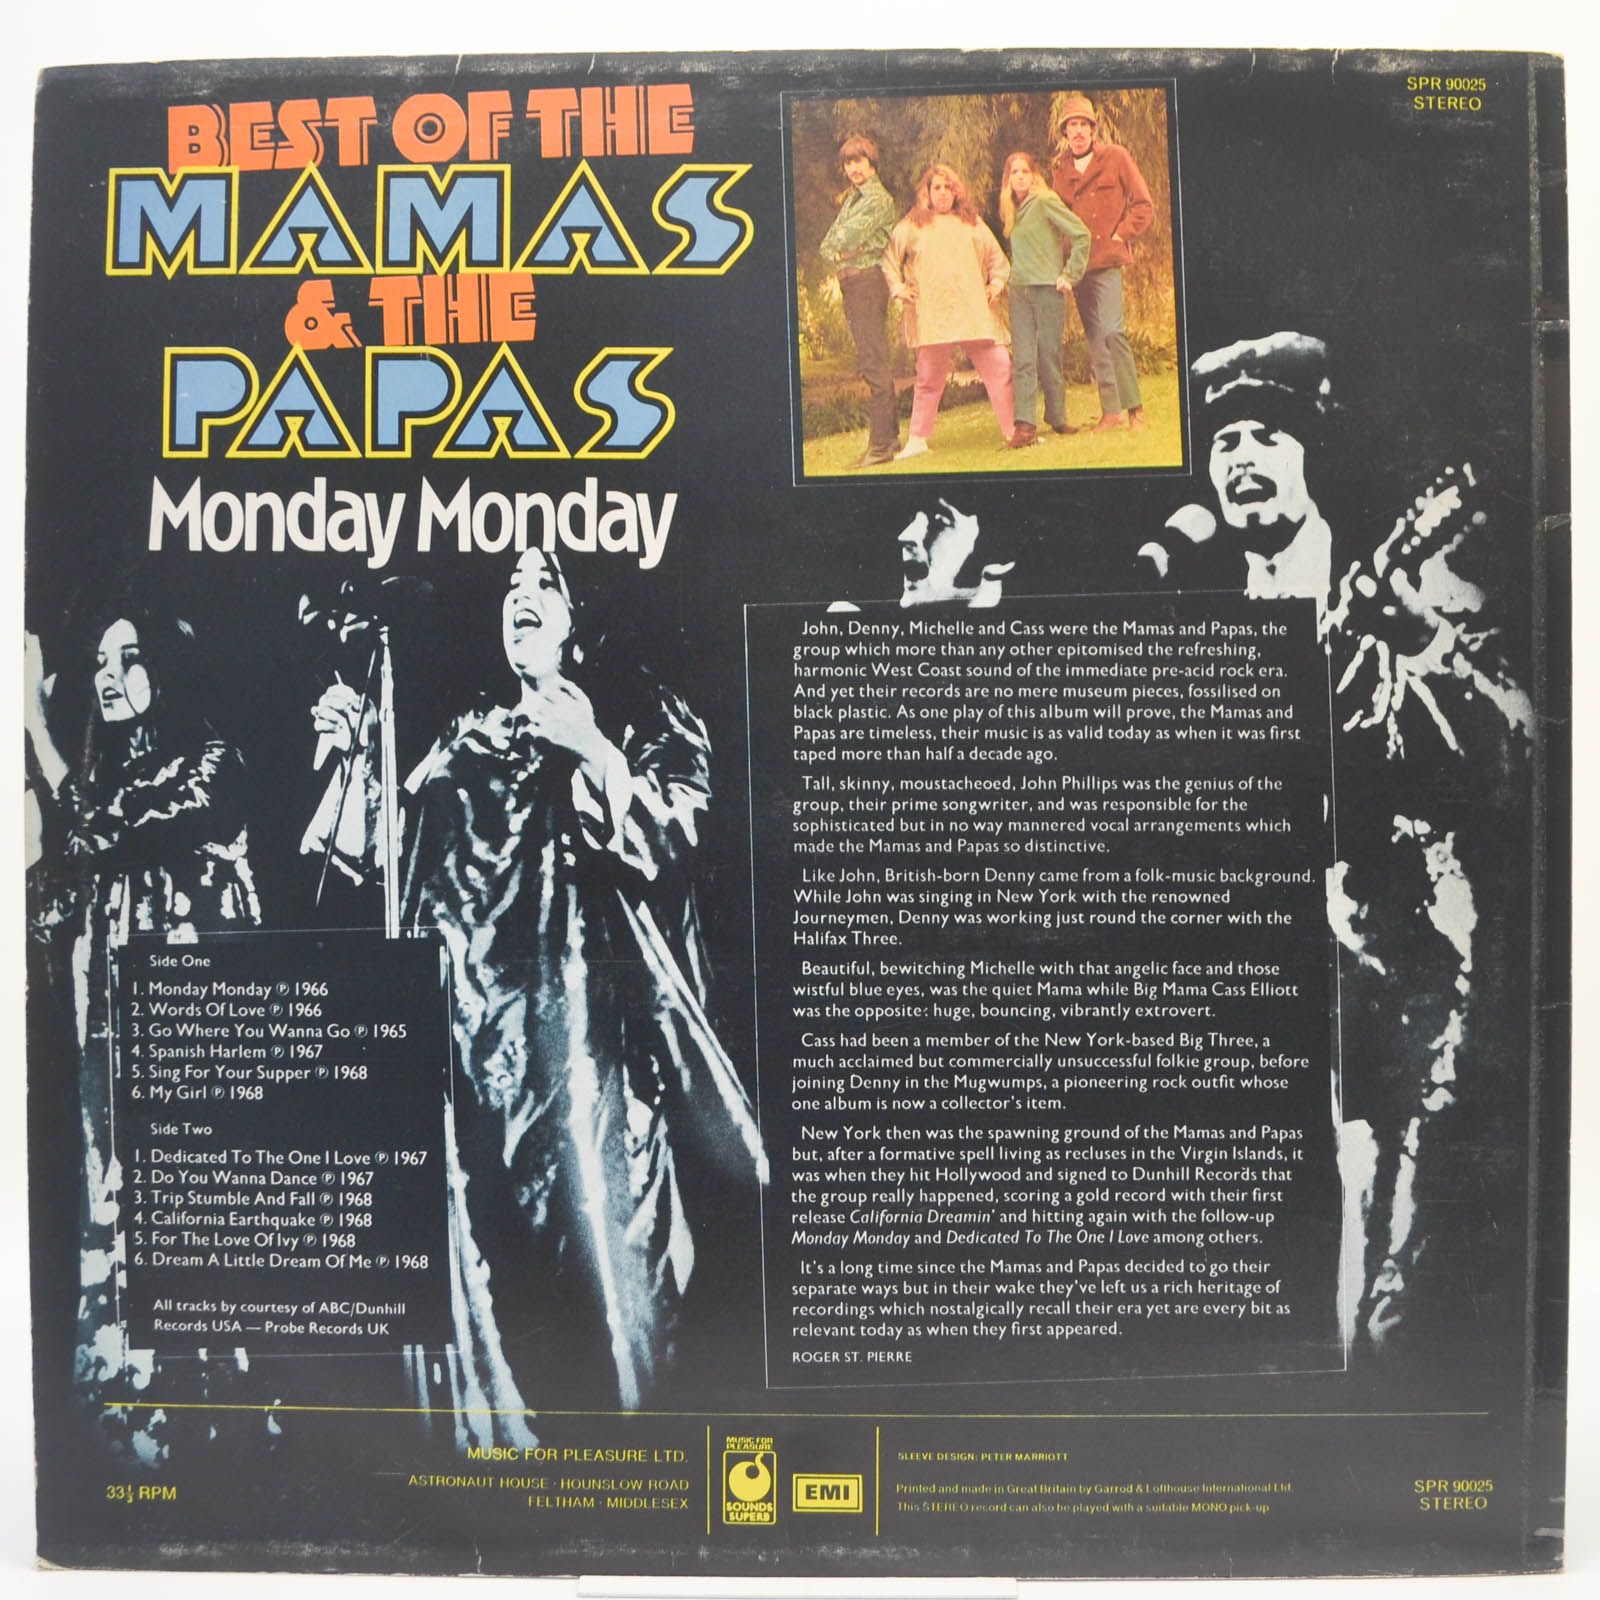 Mamas & The Papas — Best Of The Mamas & The Papas - Monday Monday (UK), 1974